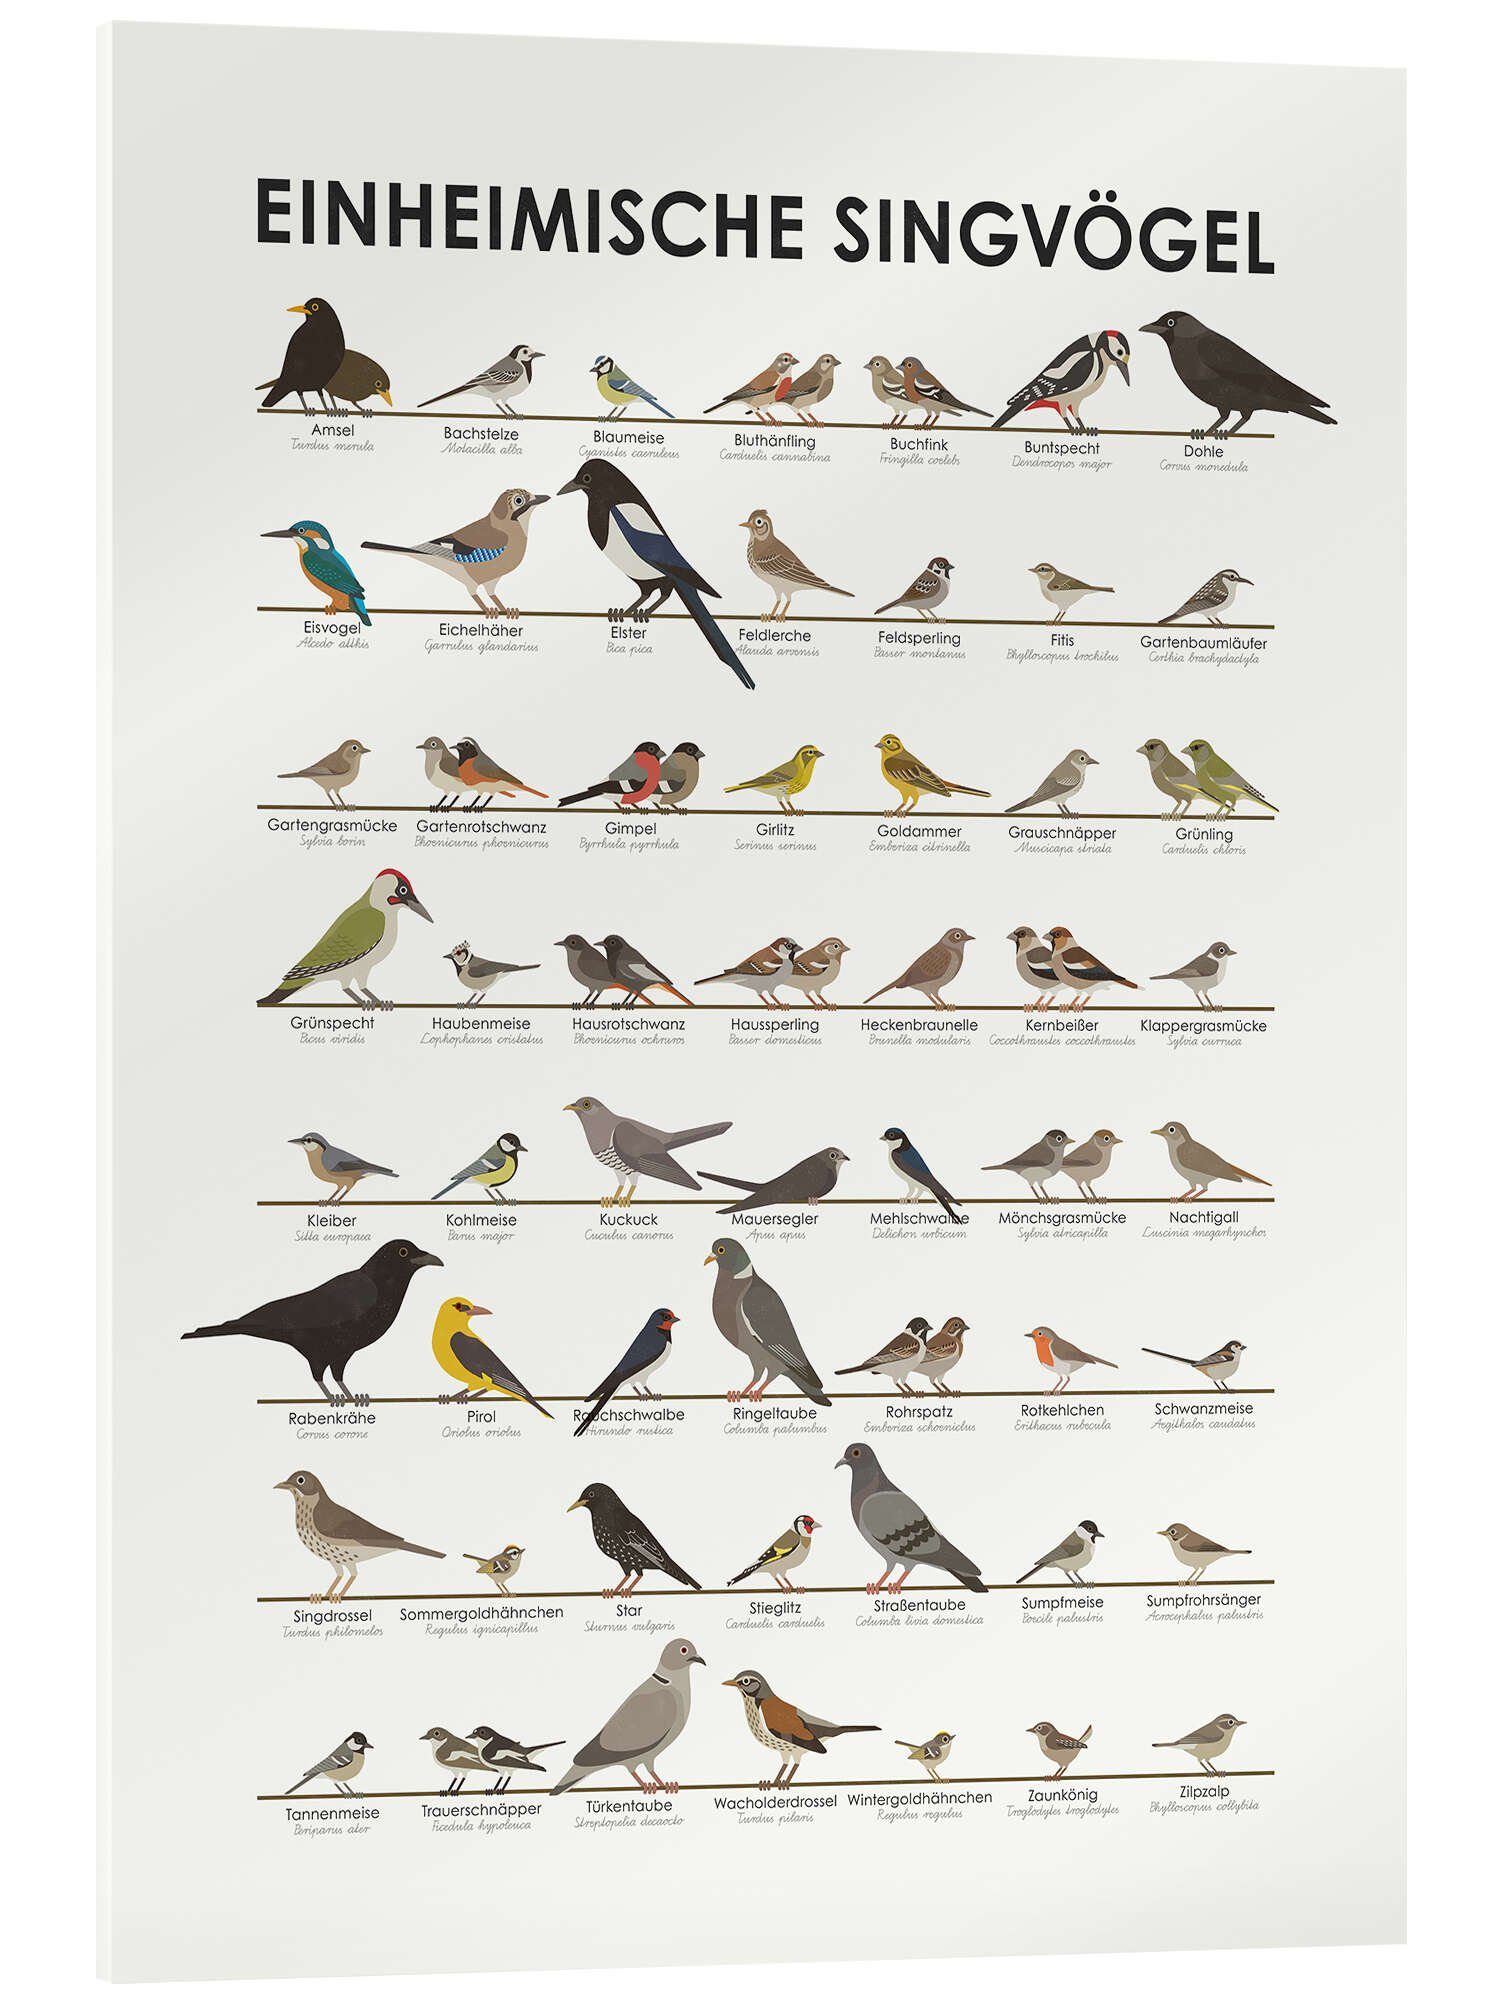 Posterlounge Acrylglasbild Iris Luckhaus, Einheimische Singvögel, Kinderzimmer Illustration